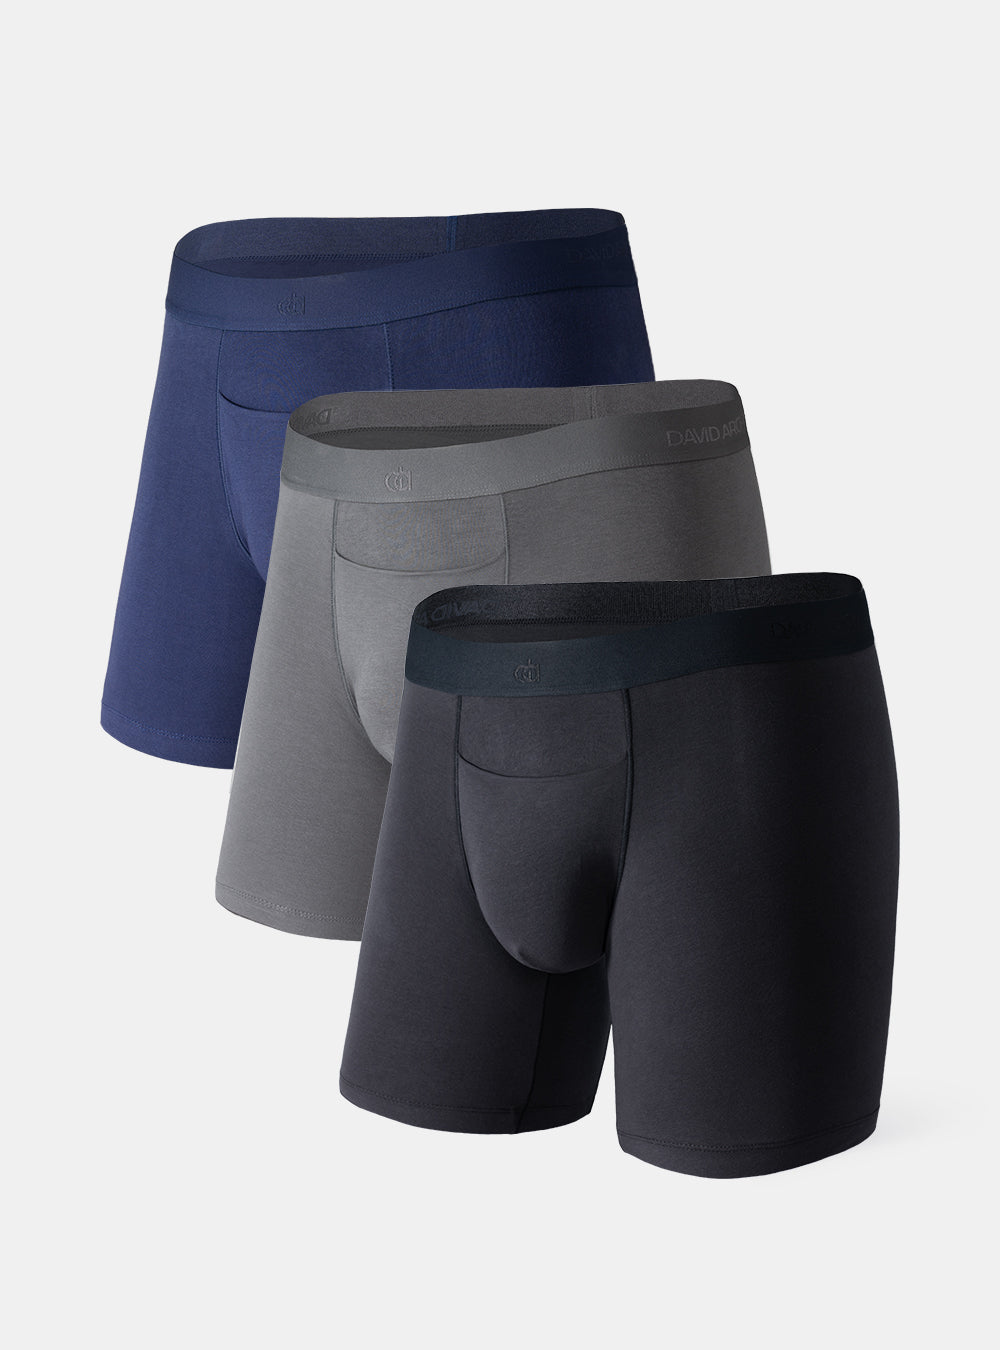  DAVID ARCHY Mens Underwear Solid Quick Dry Boxer Briefs  Active Performance Sports Odor Control Athletic Pouch Underwear